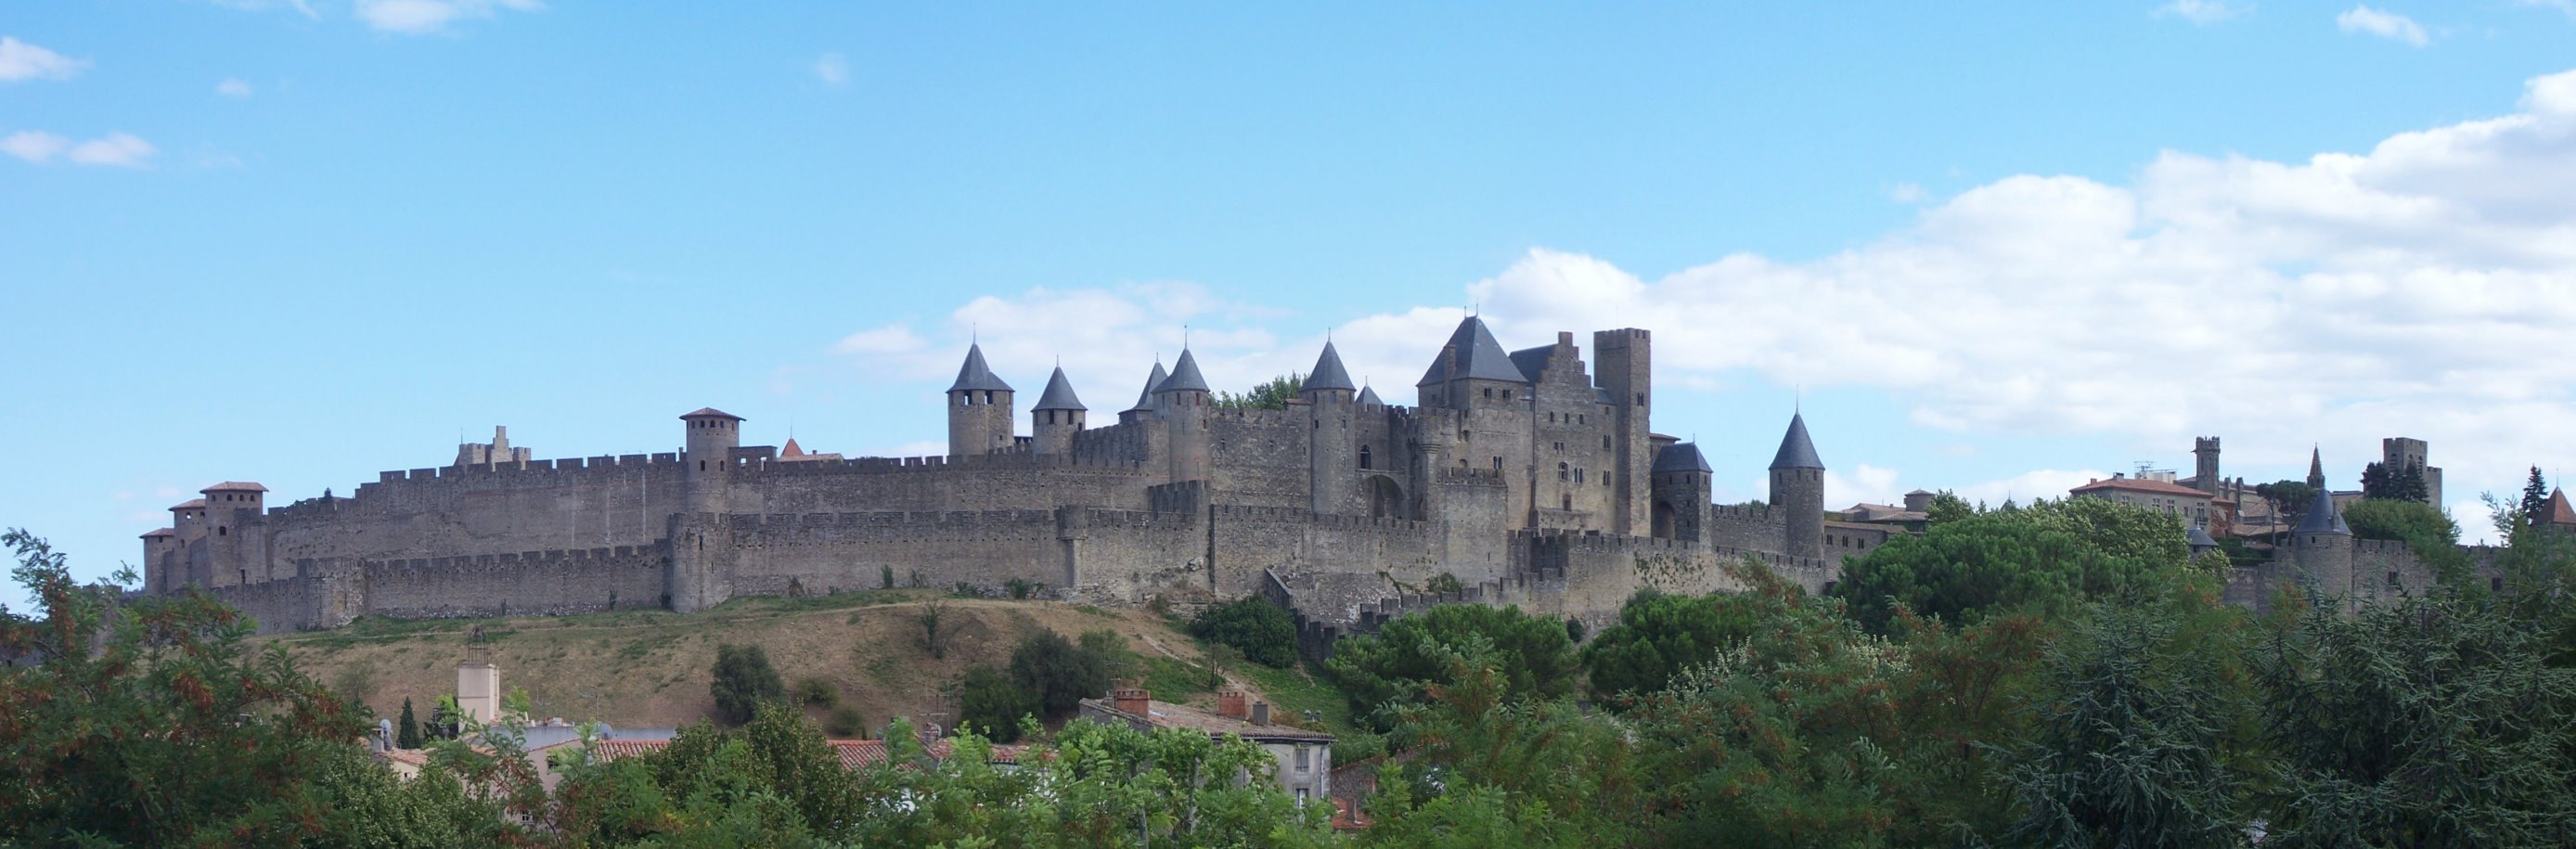 carcassonne8640.jpg